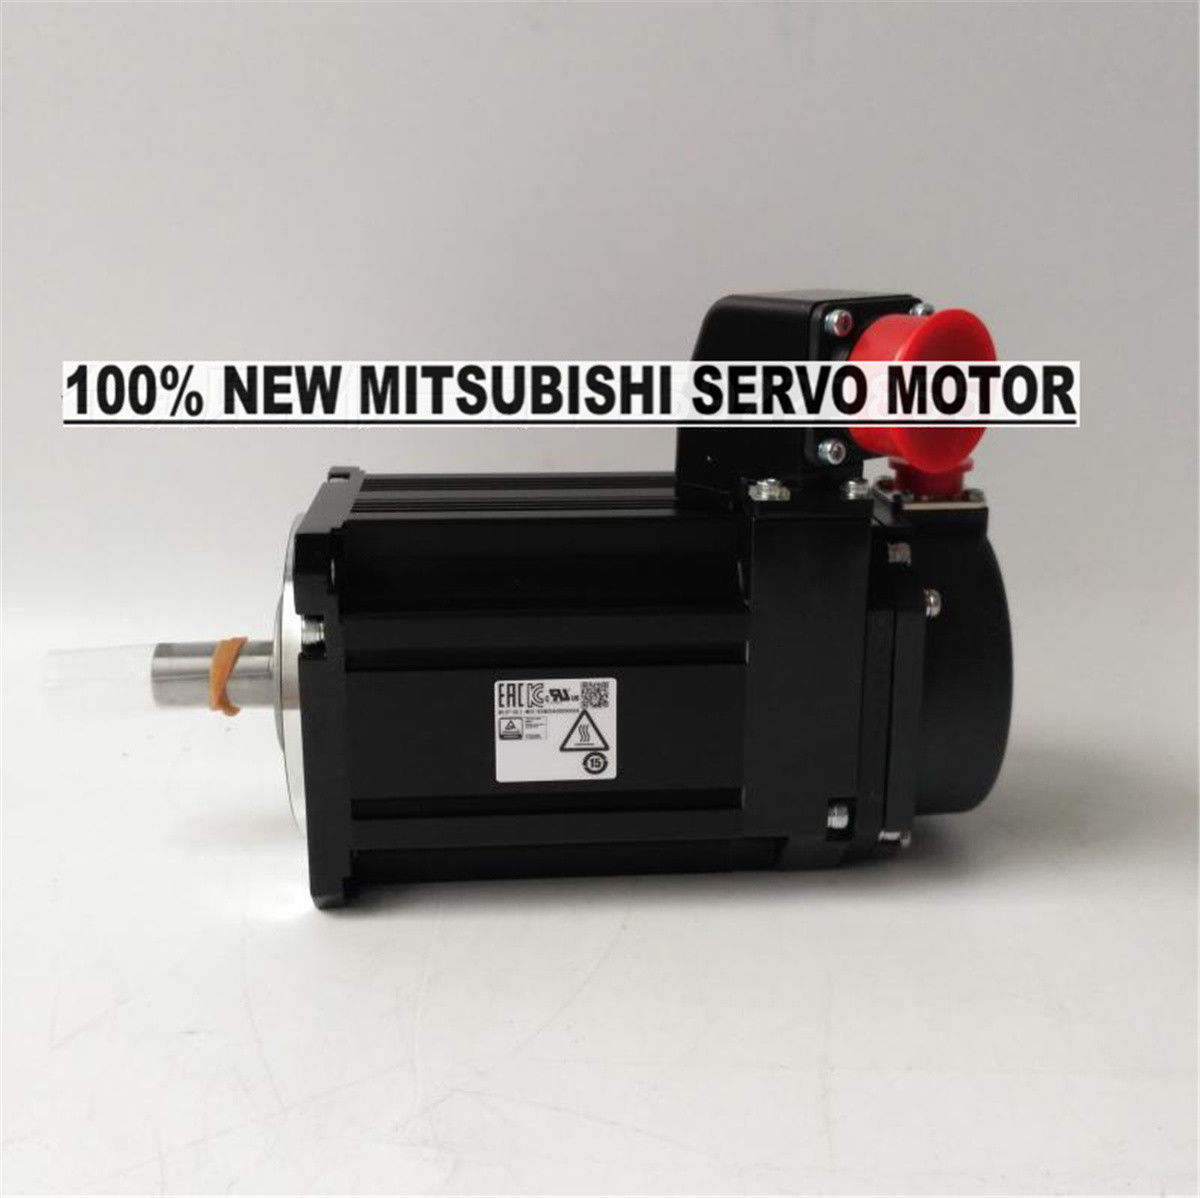 Brand New Mitsubishi Servo Motor HG-JR103 in box HGJR103 - Click Image to Close